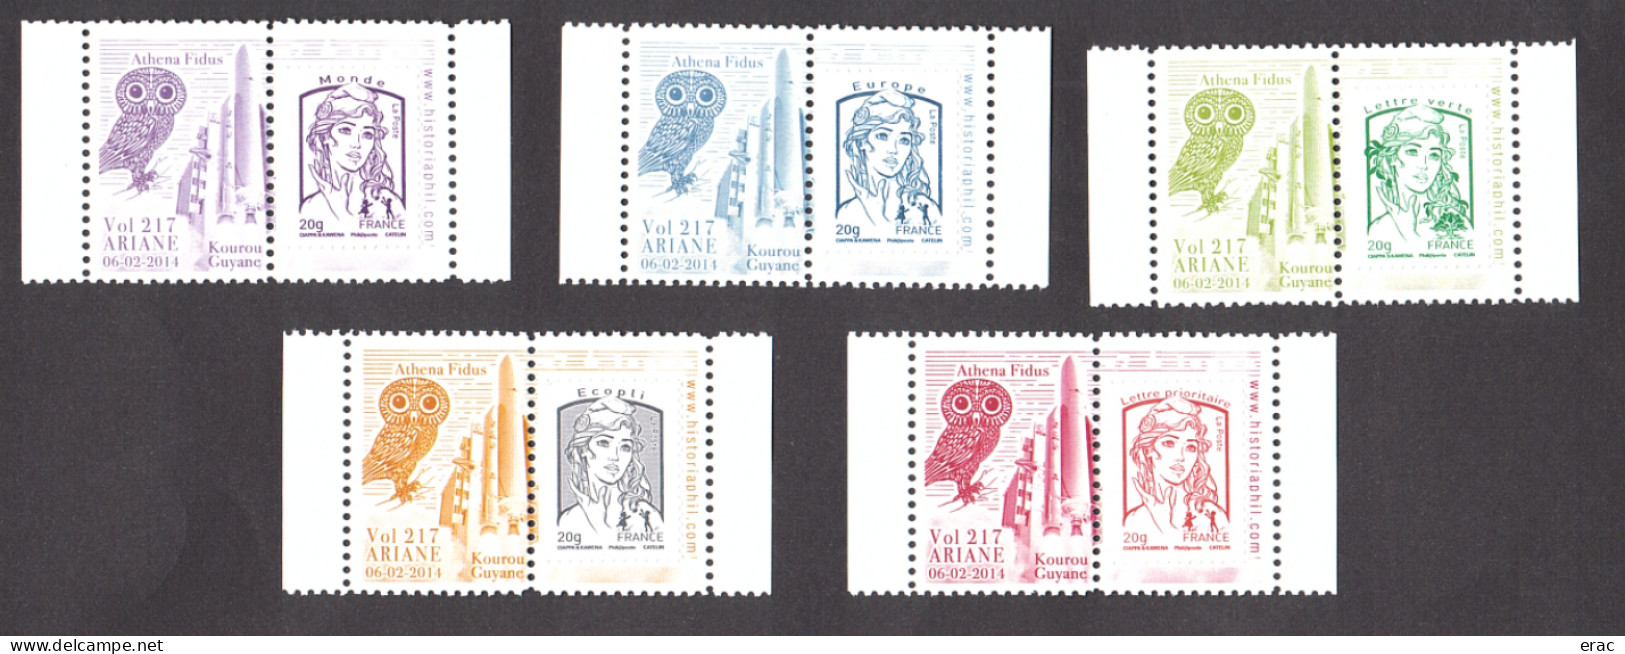 5 Porte-timbres Gommés - 2014 Ariane Vol 217 - Athena Fidus- Avec TVP Marianne De Ciappa & Kawena Neufs - 2013-2018 Marianne Van Ciappa-Kawena